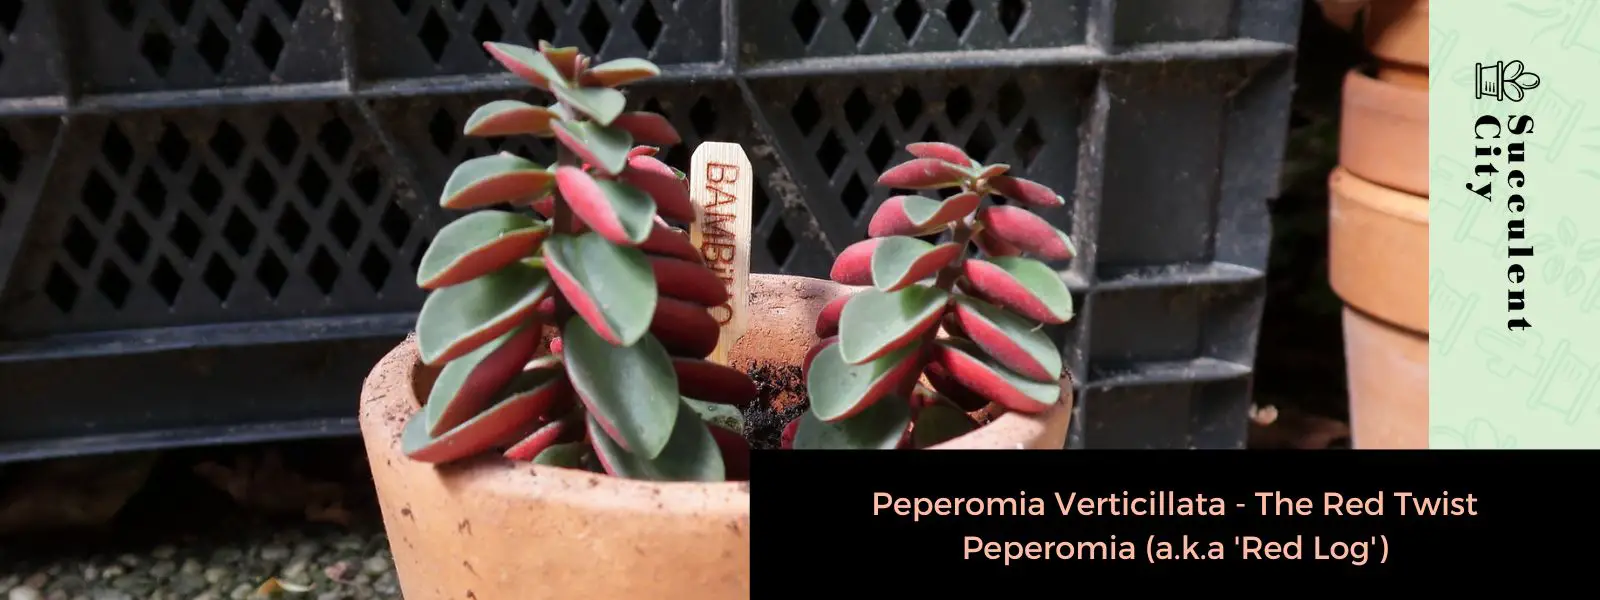 Peperomia Verticillata – La Peperomia Red Twist (también conocida como “Red Log”)